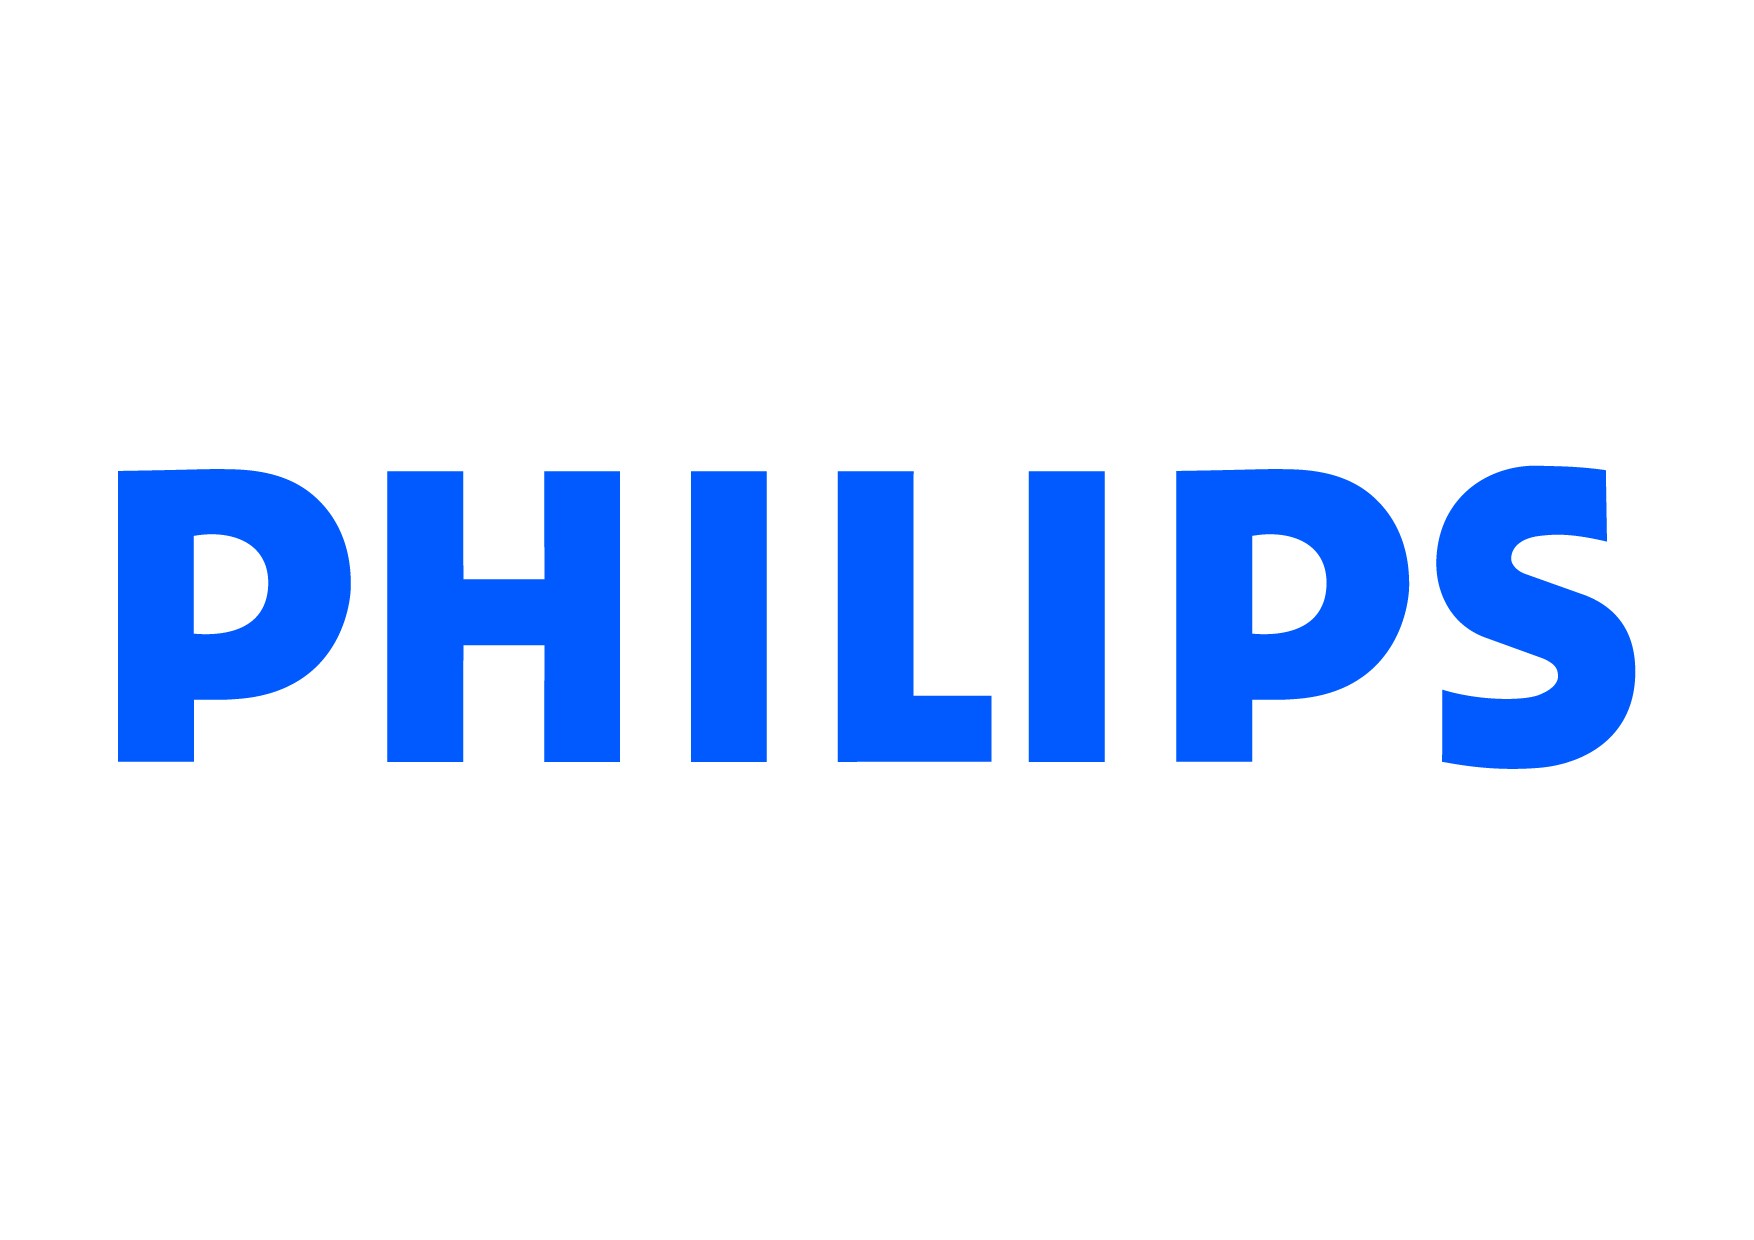 Philips Service